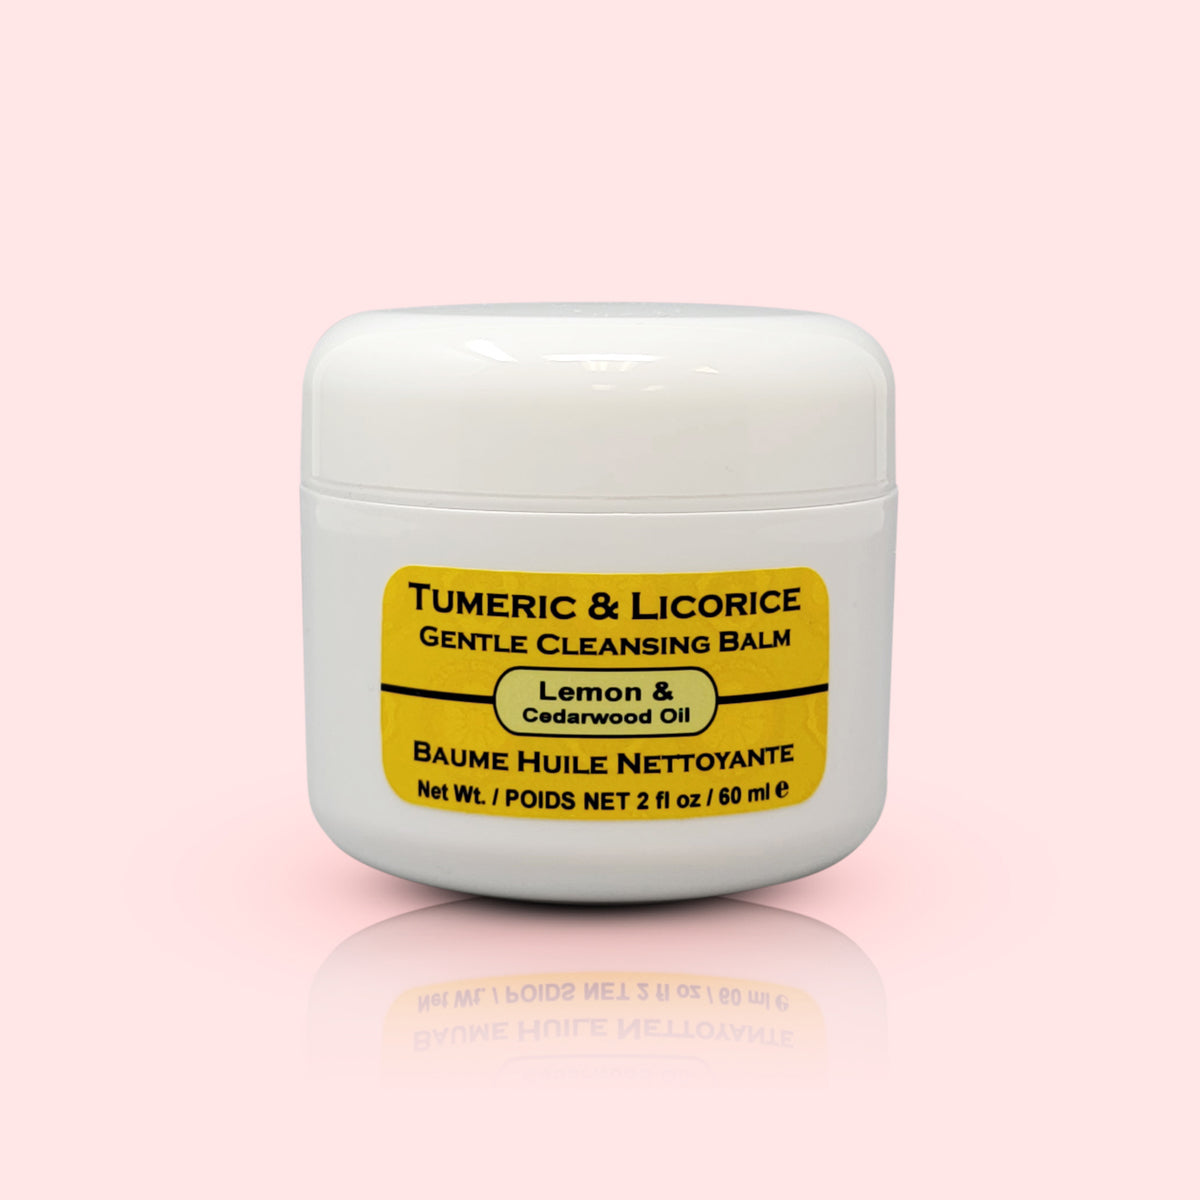 Tumeric & Licorice Gentle Cleansing Balm